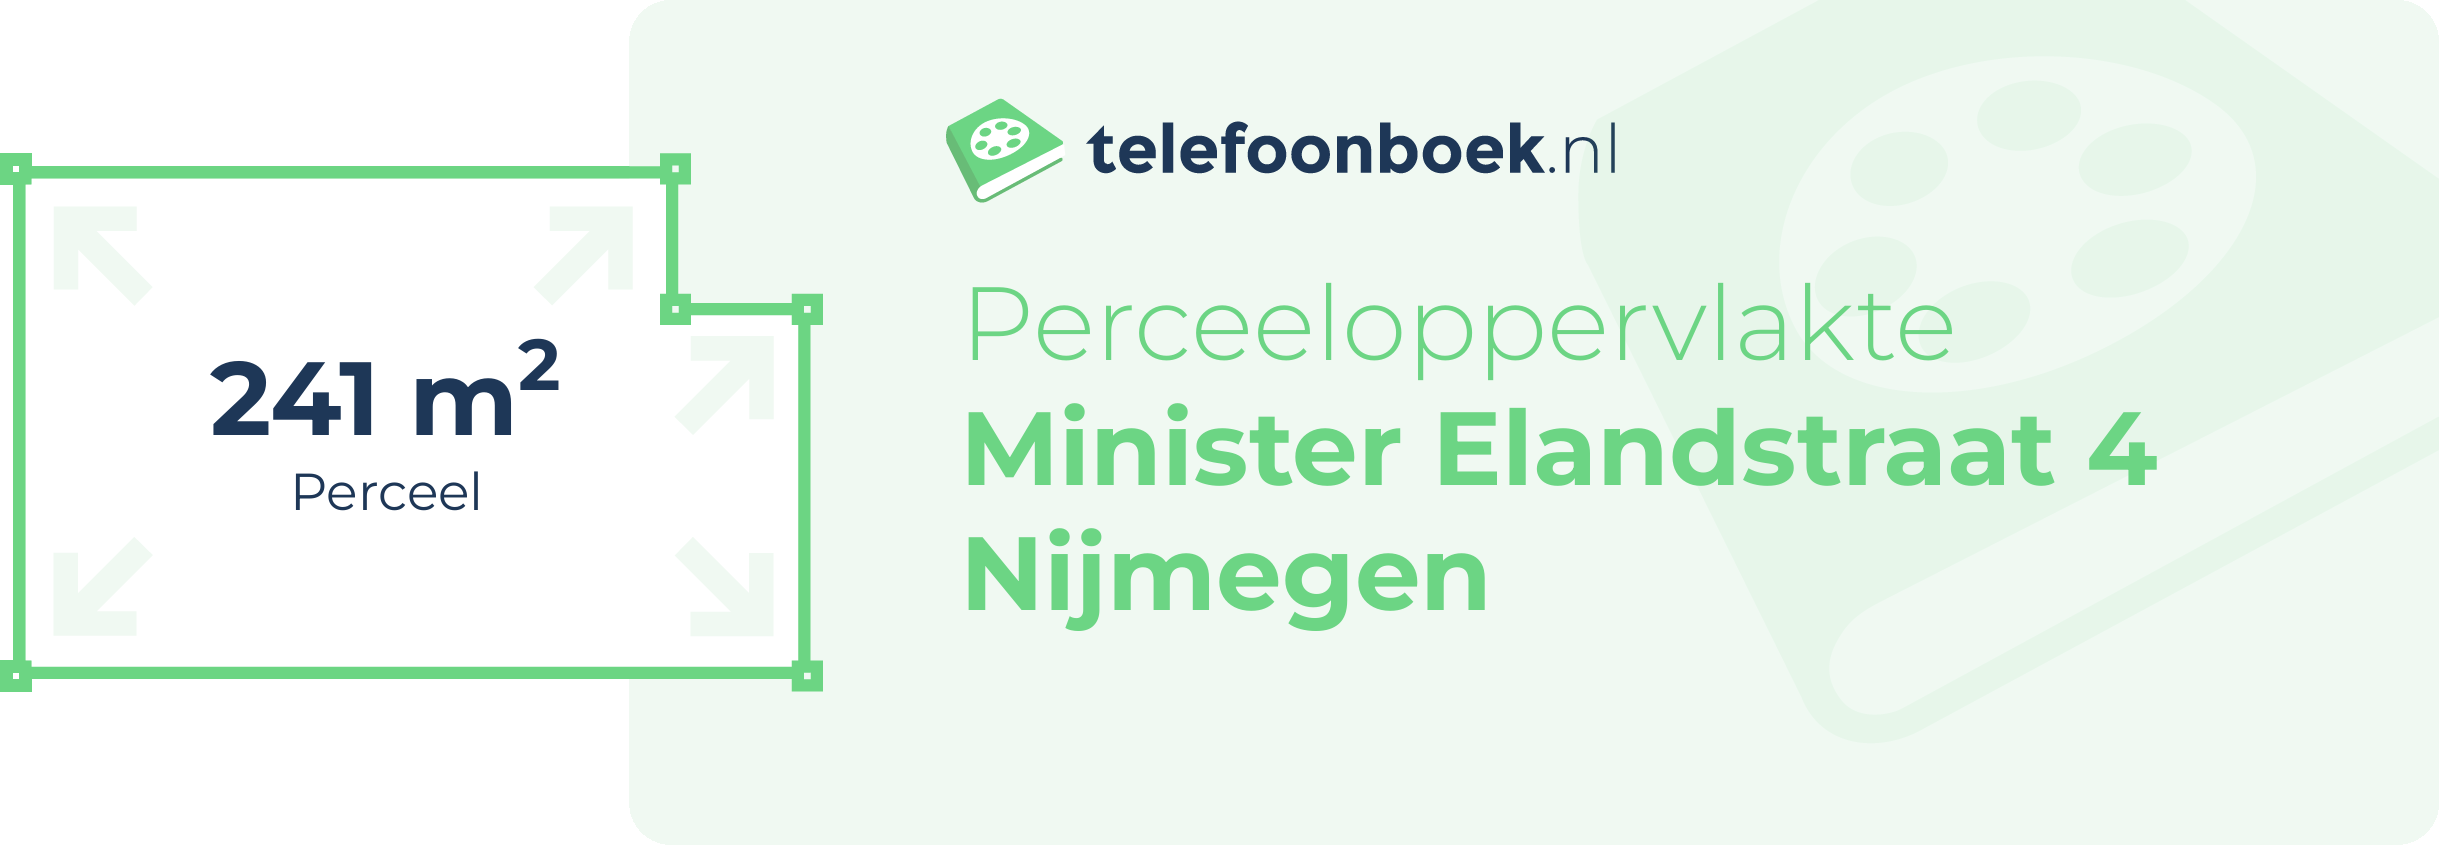 Perceeloppervlakte Minister Elandstraat 4 Nijmegen